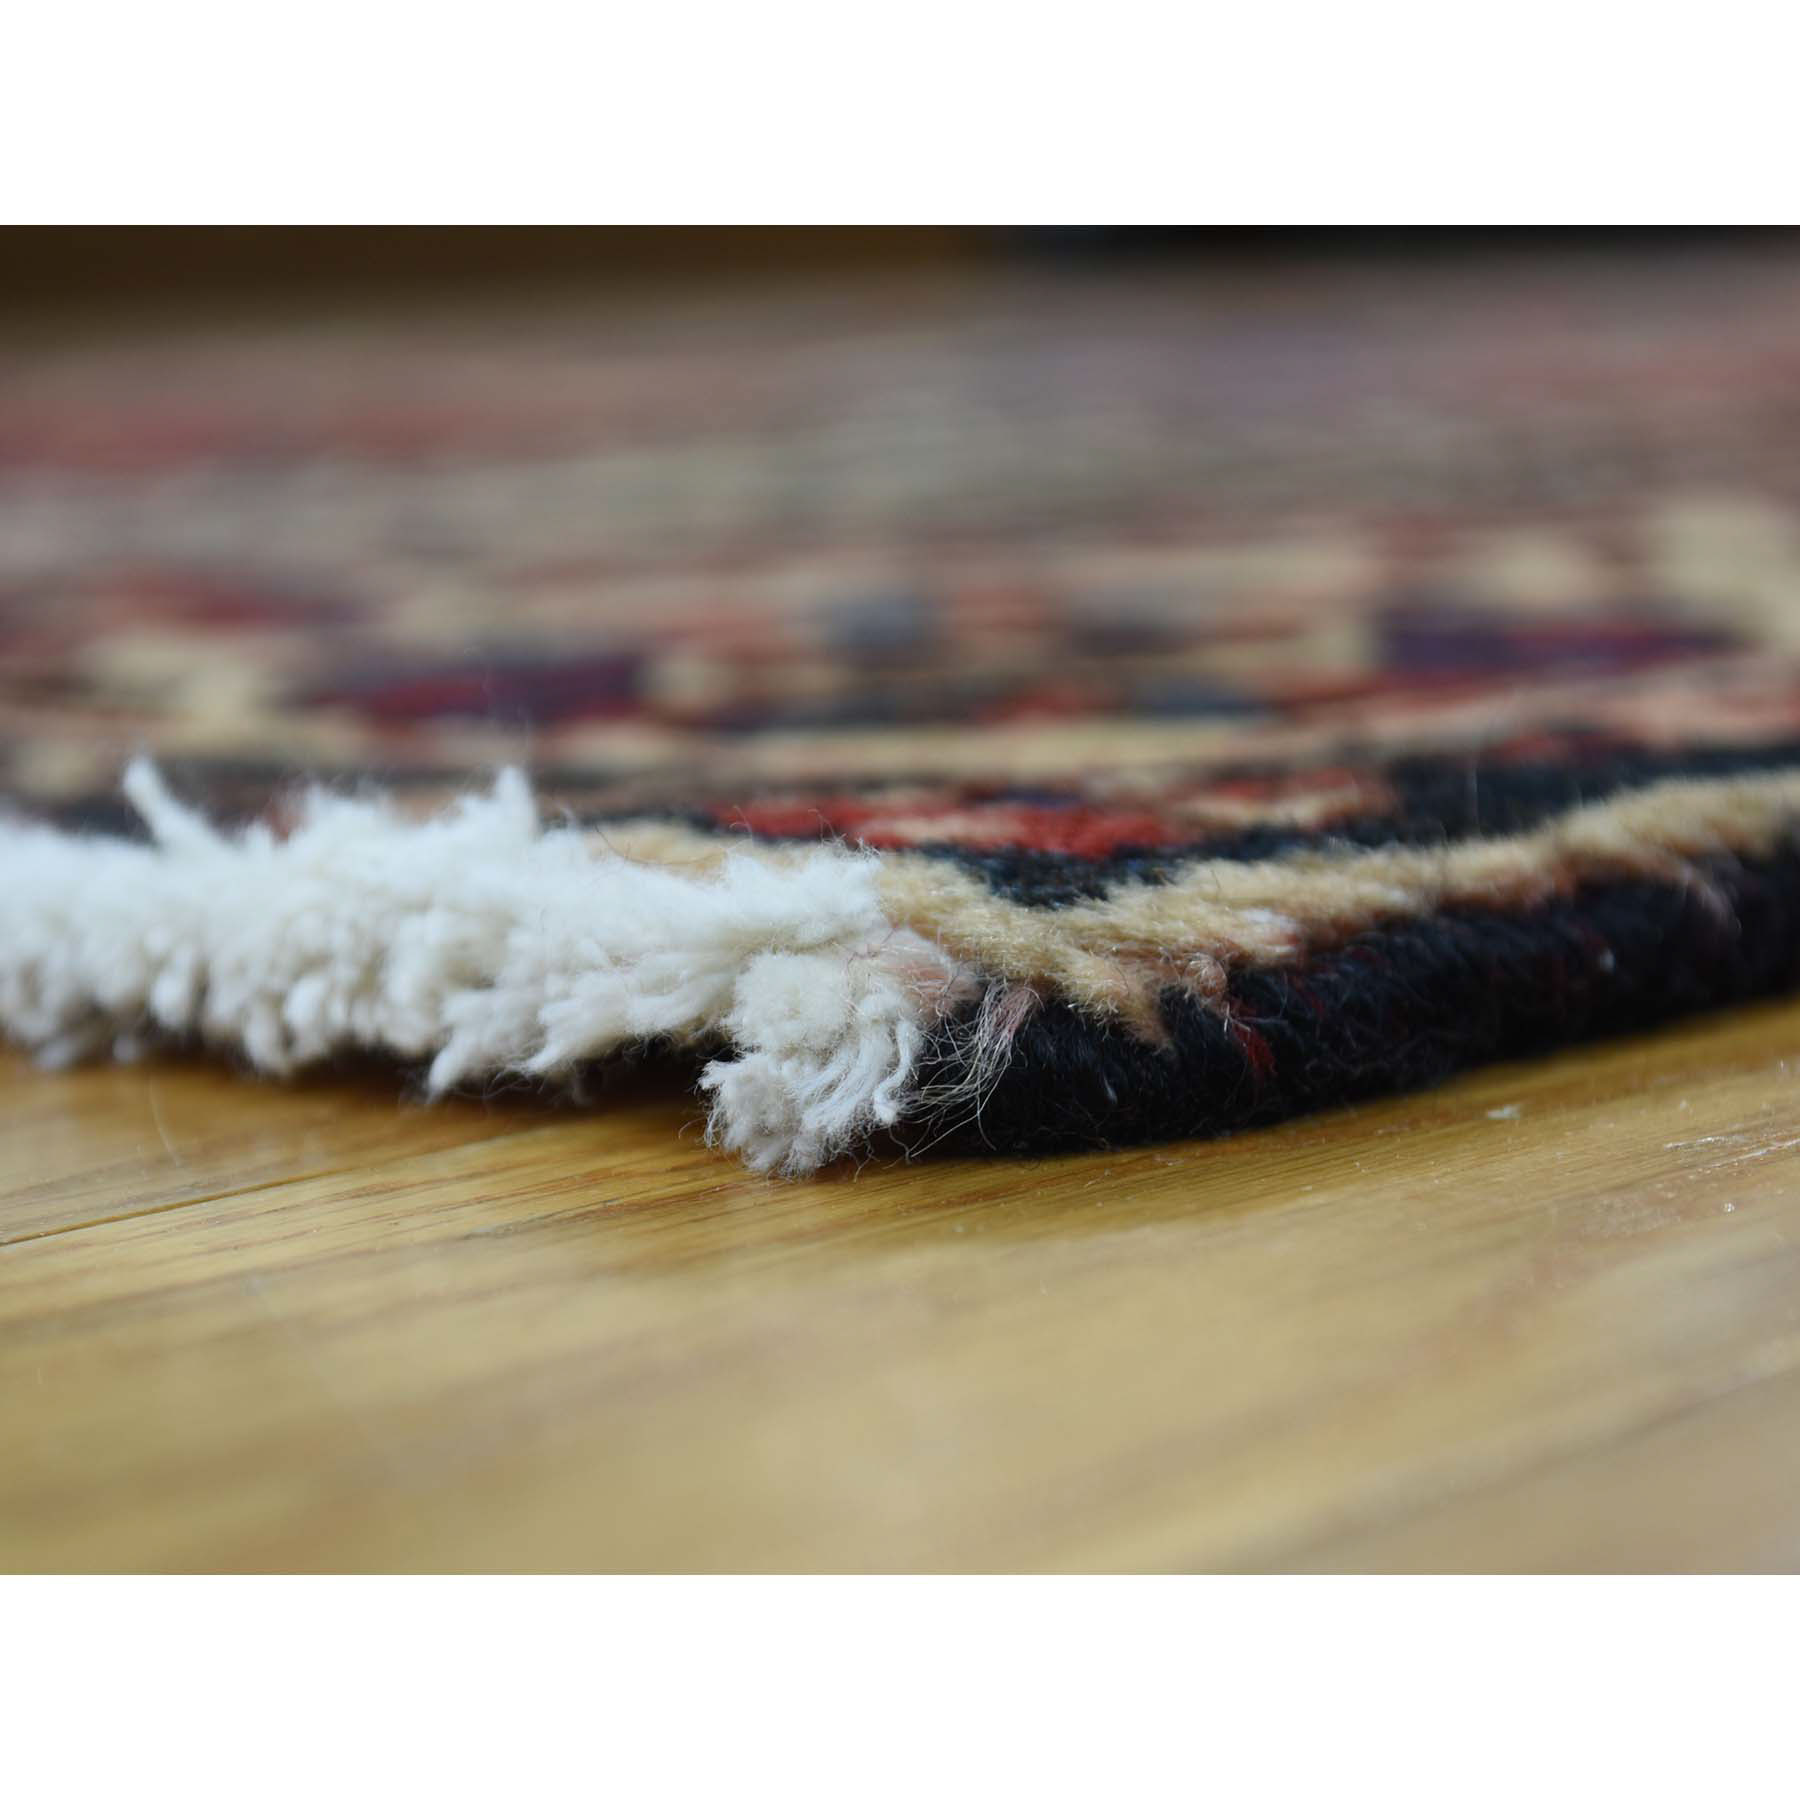 5-1 x10- Bakhtiari Garden Design Hand-Knotted Pure Wool Wide Runner Rug 